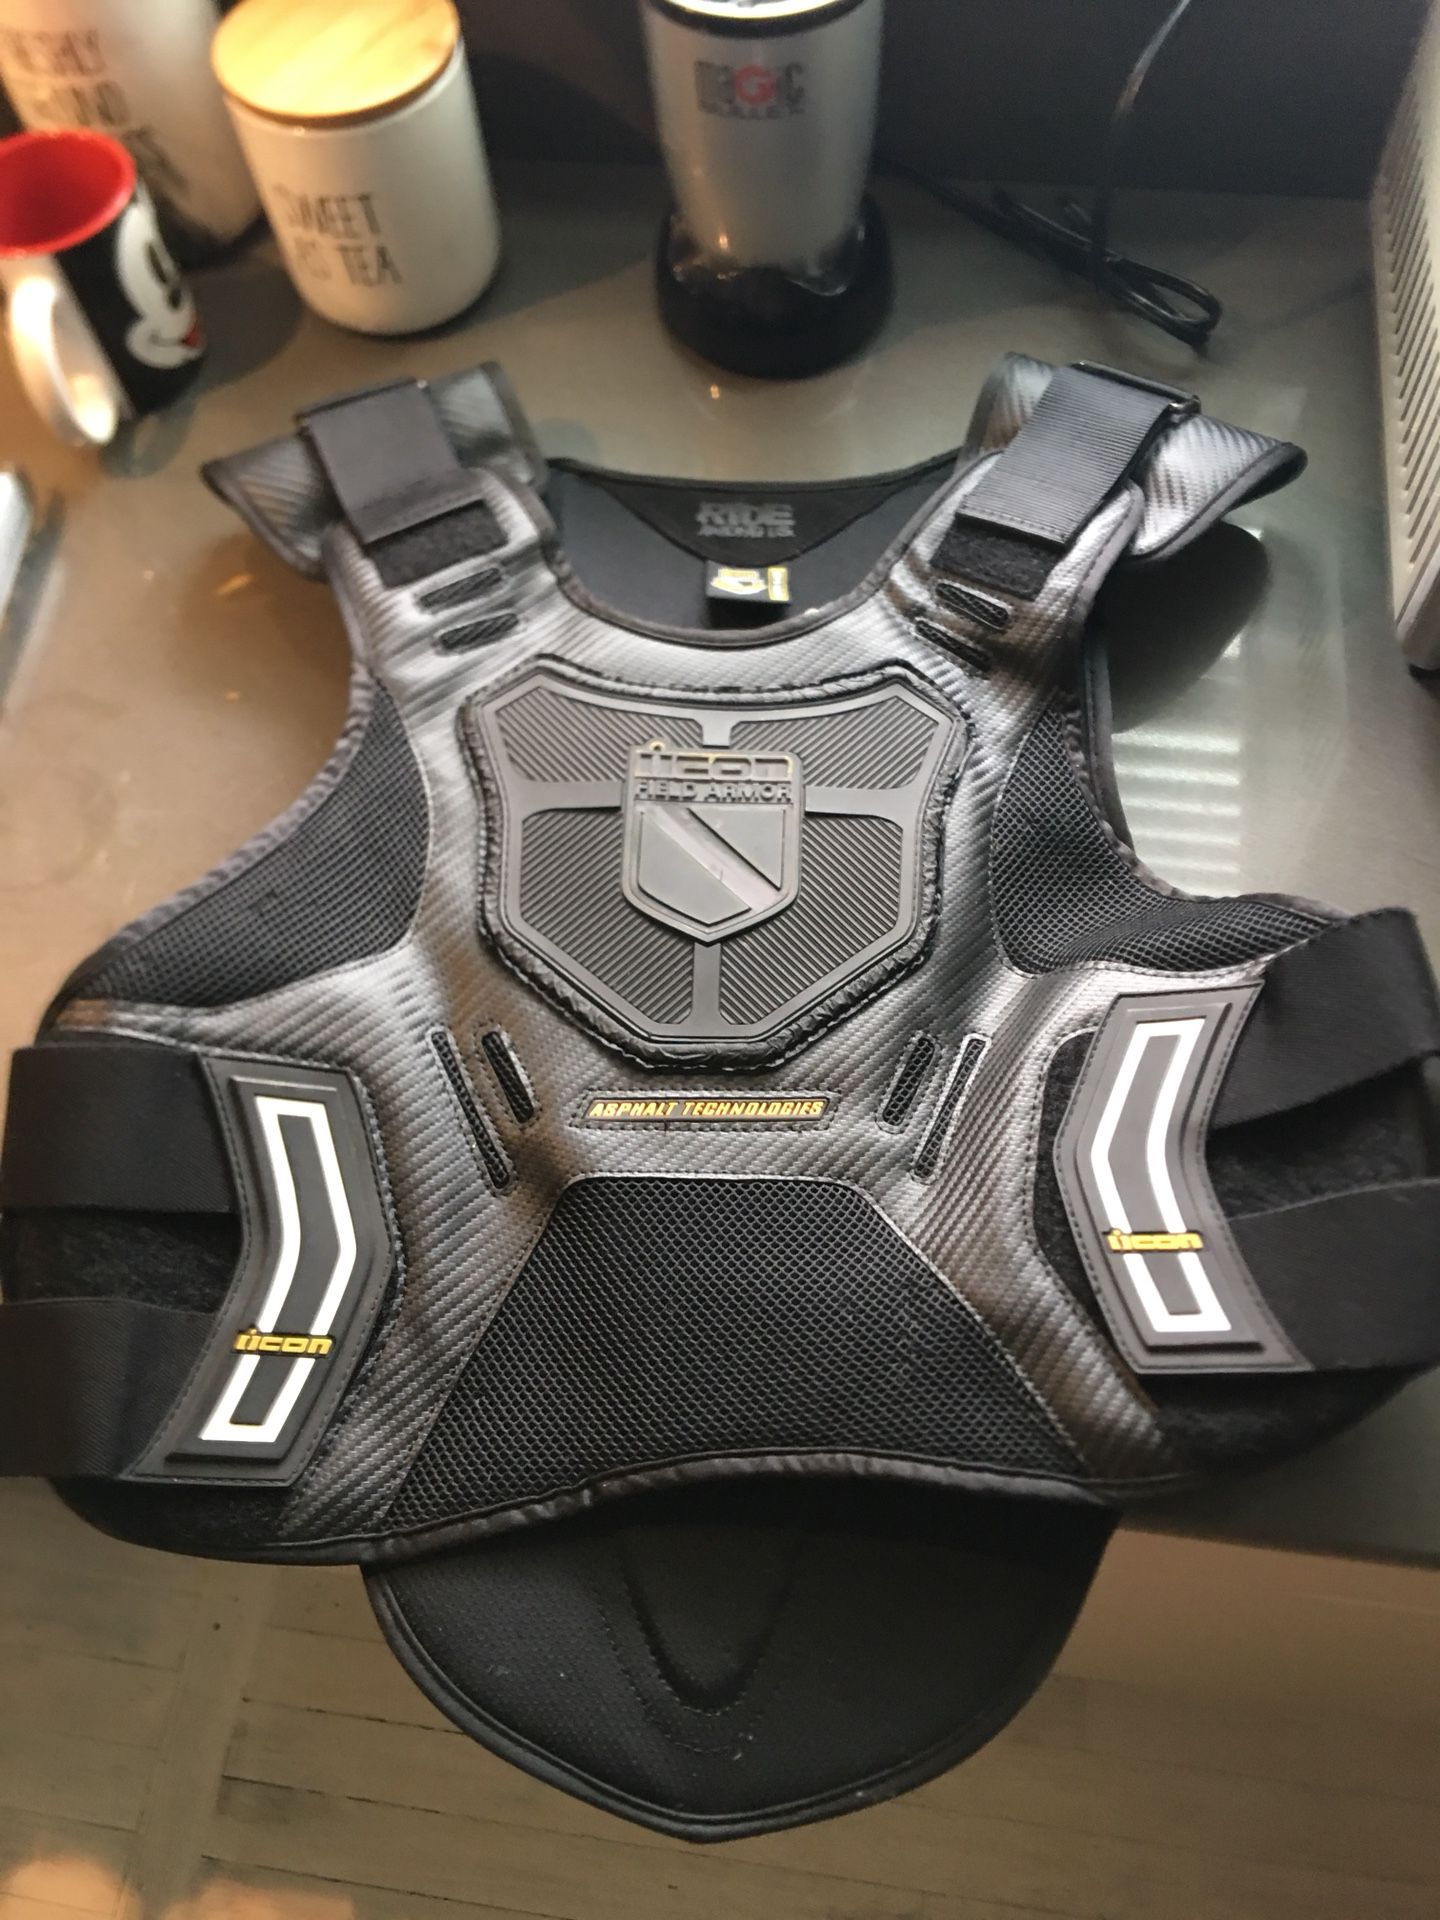 Icon motorcycle vest